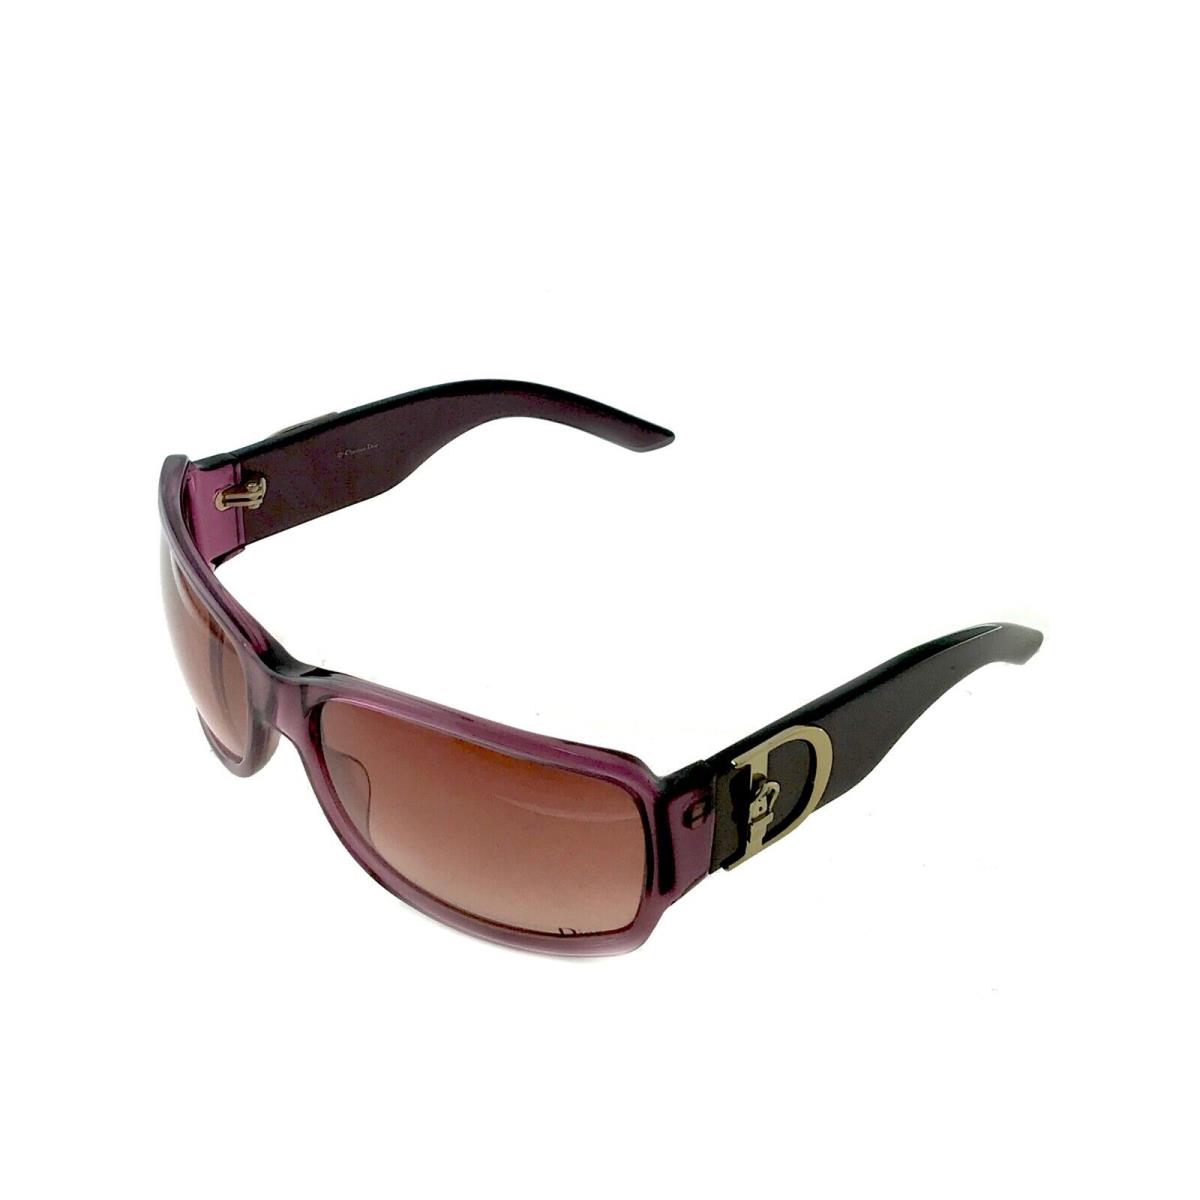 Chrisitian Dior Ltgpb 64-16-115 Eyewear Fashion Designer Sunglasses